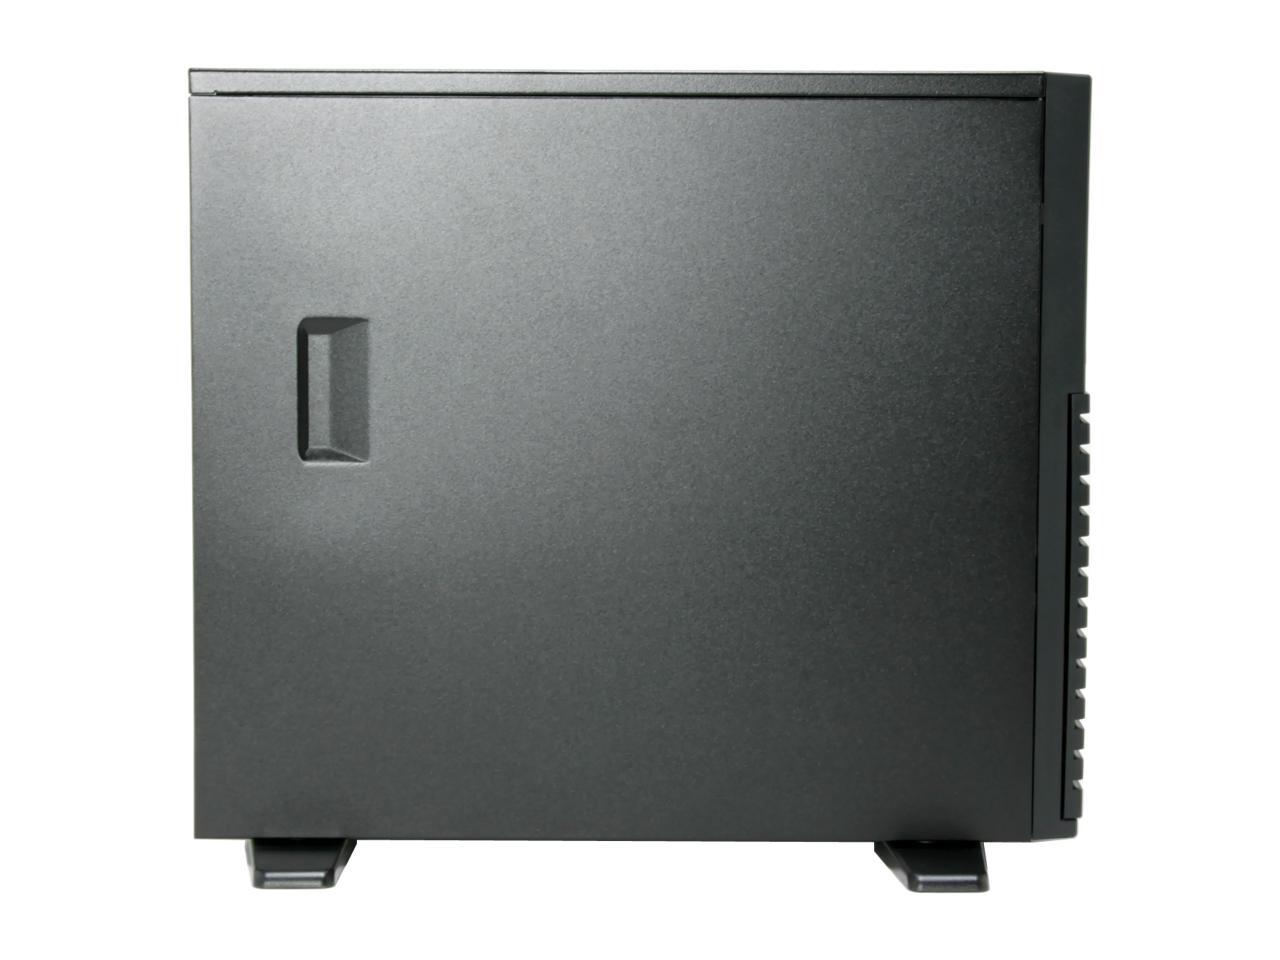 Chenbro Sr20969-Bk No Power Supply Workstation Case (Black)